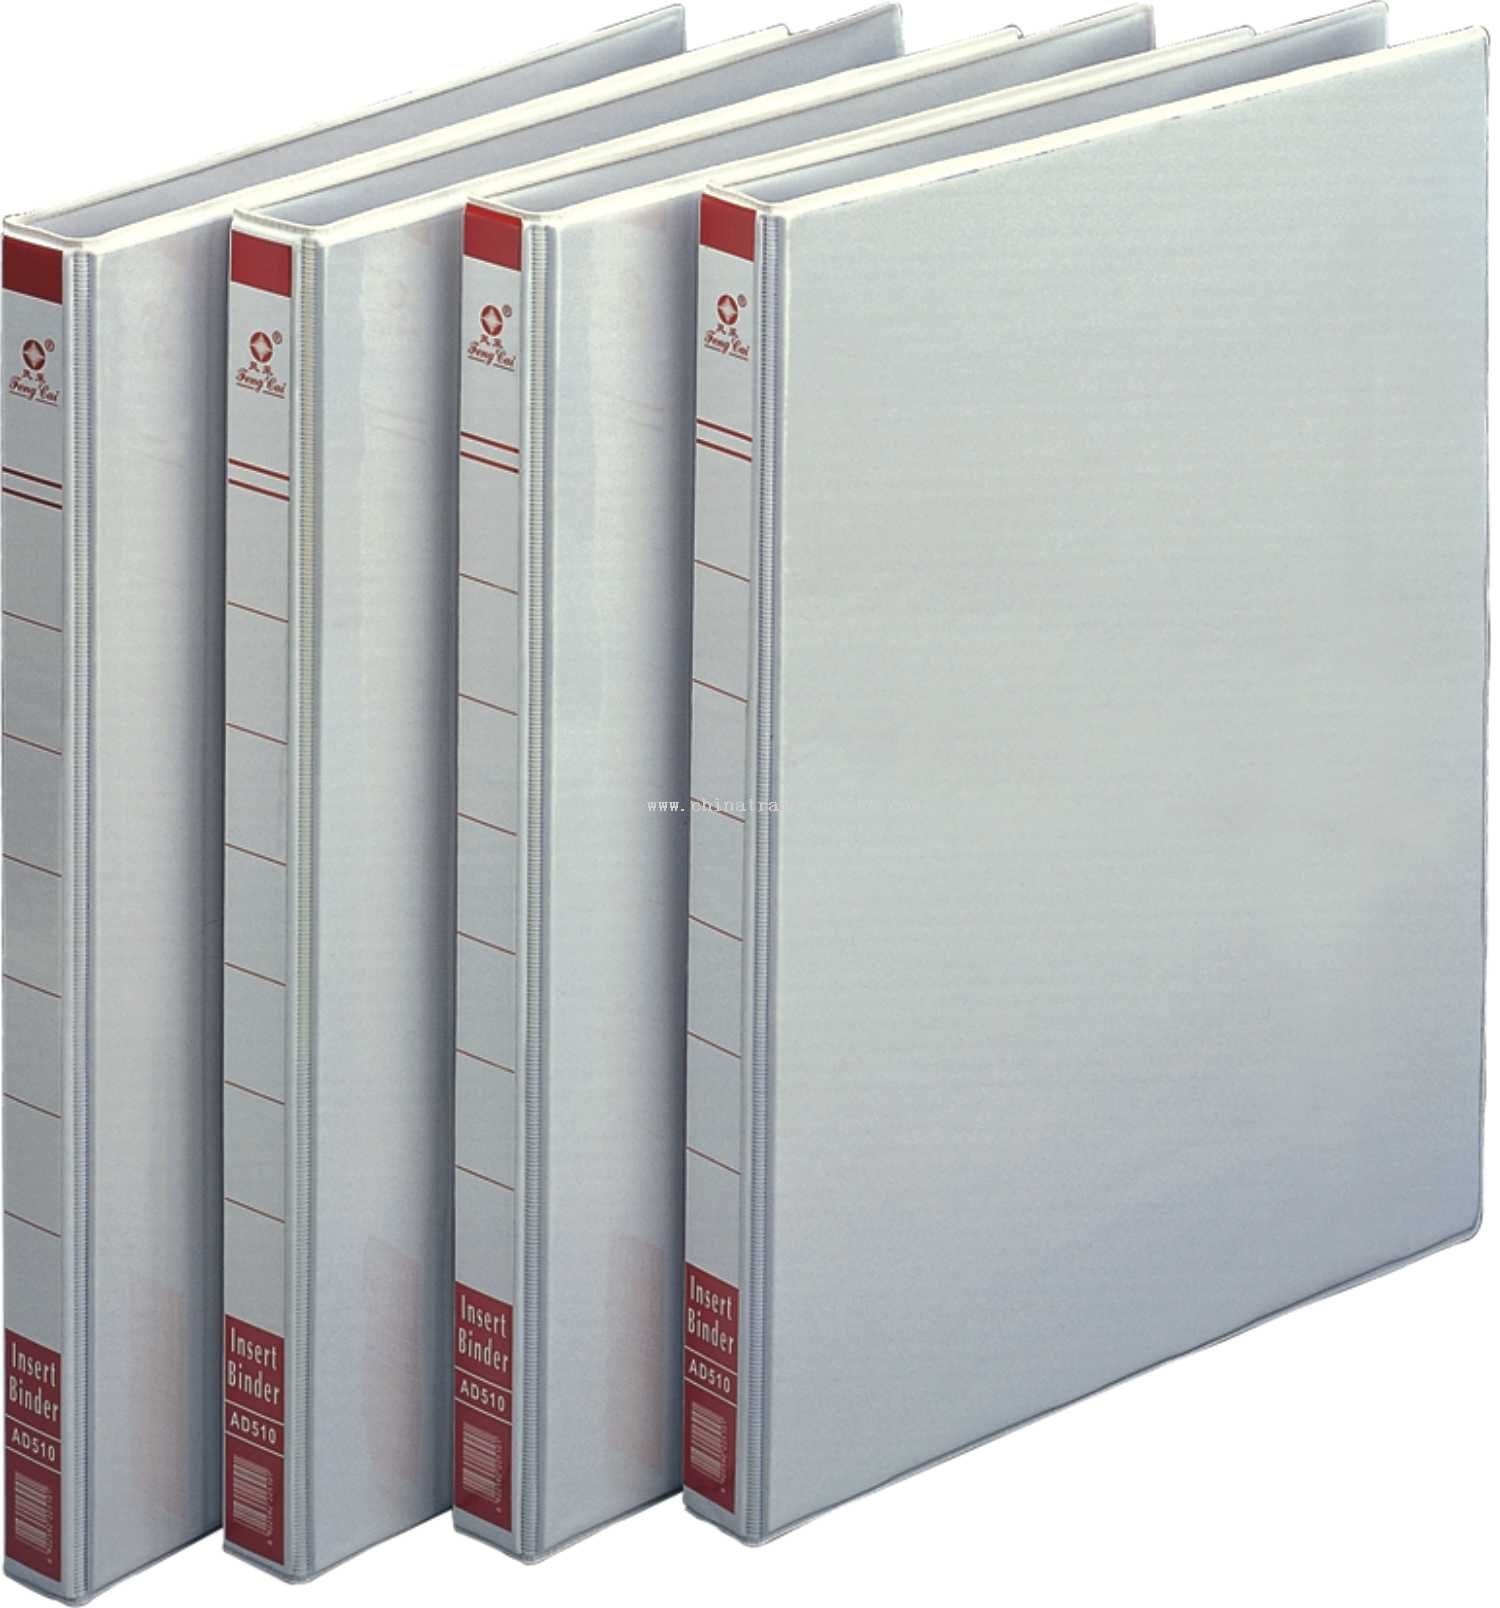 File folder ( 20mm ridge width ) from China